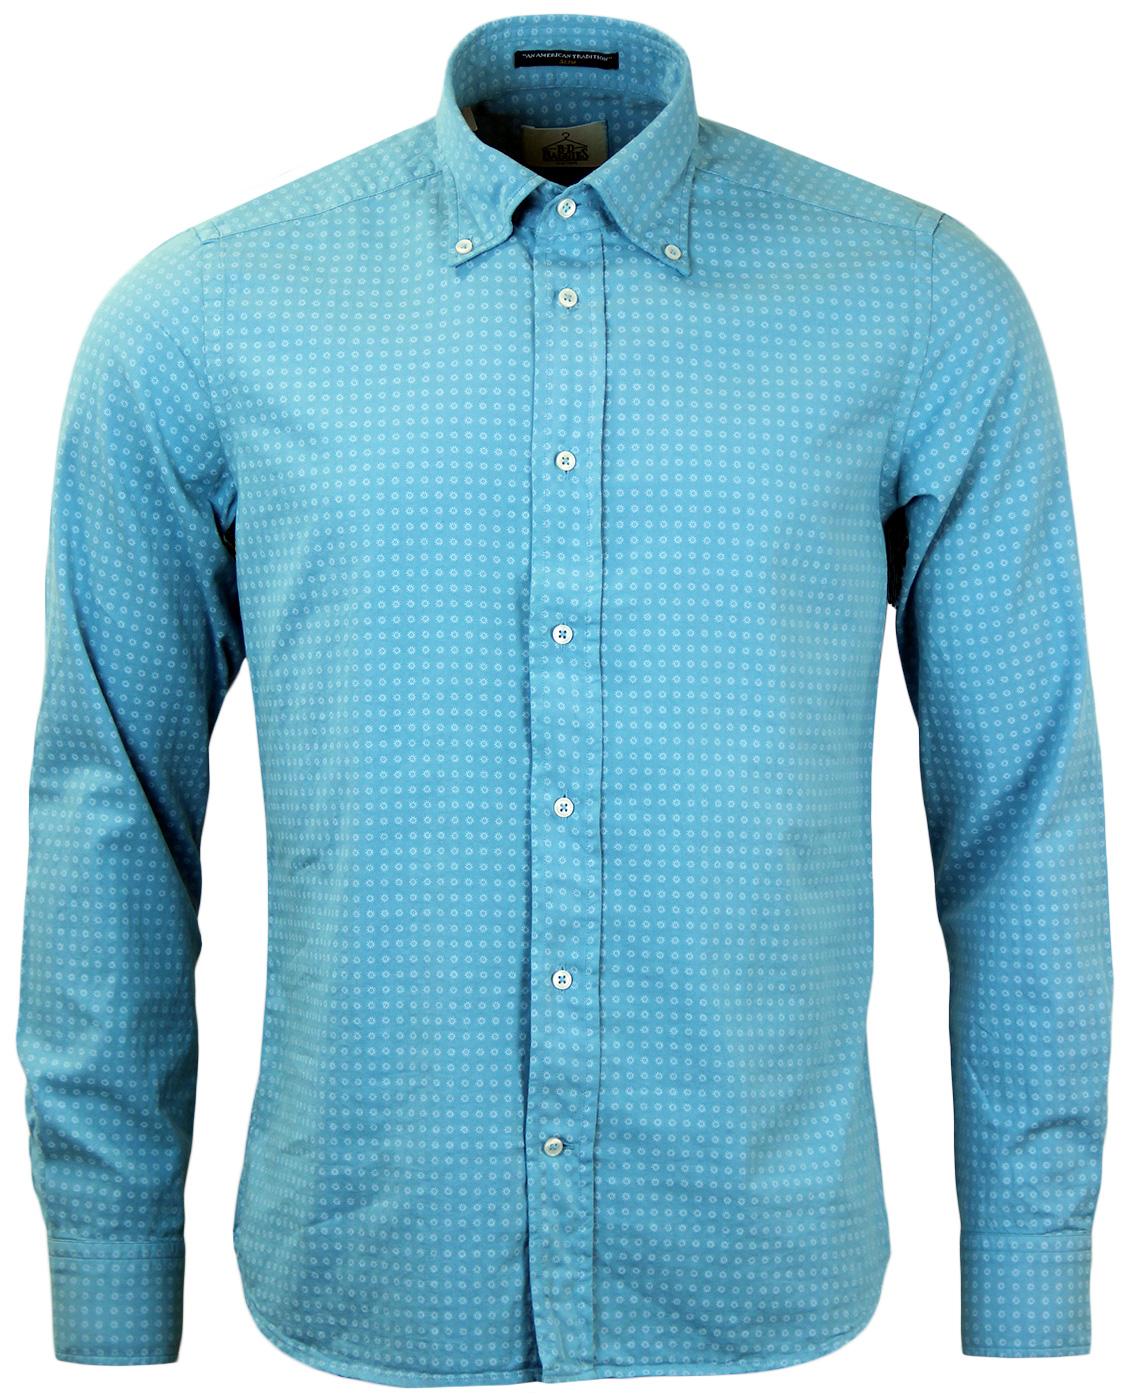 B D BAGGIES Dexter Retro Mod Micro Floral Print Shirt Turquoise